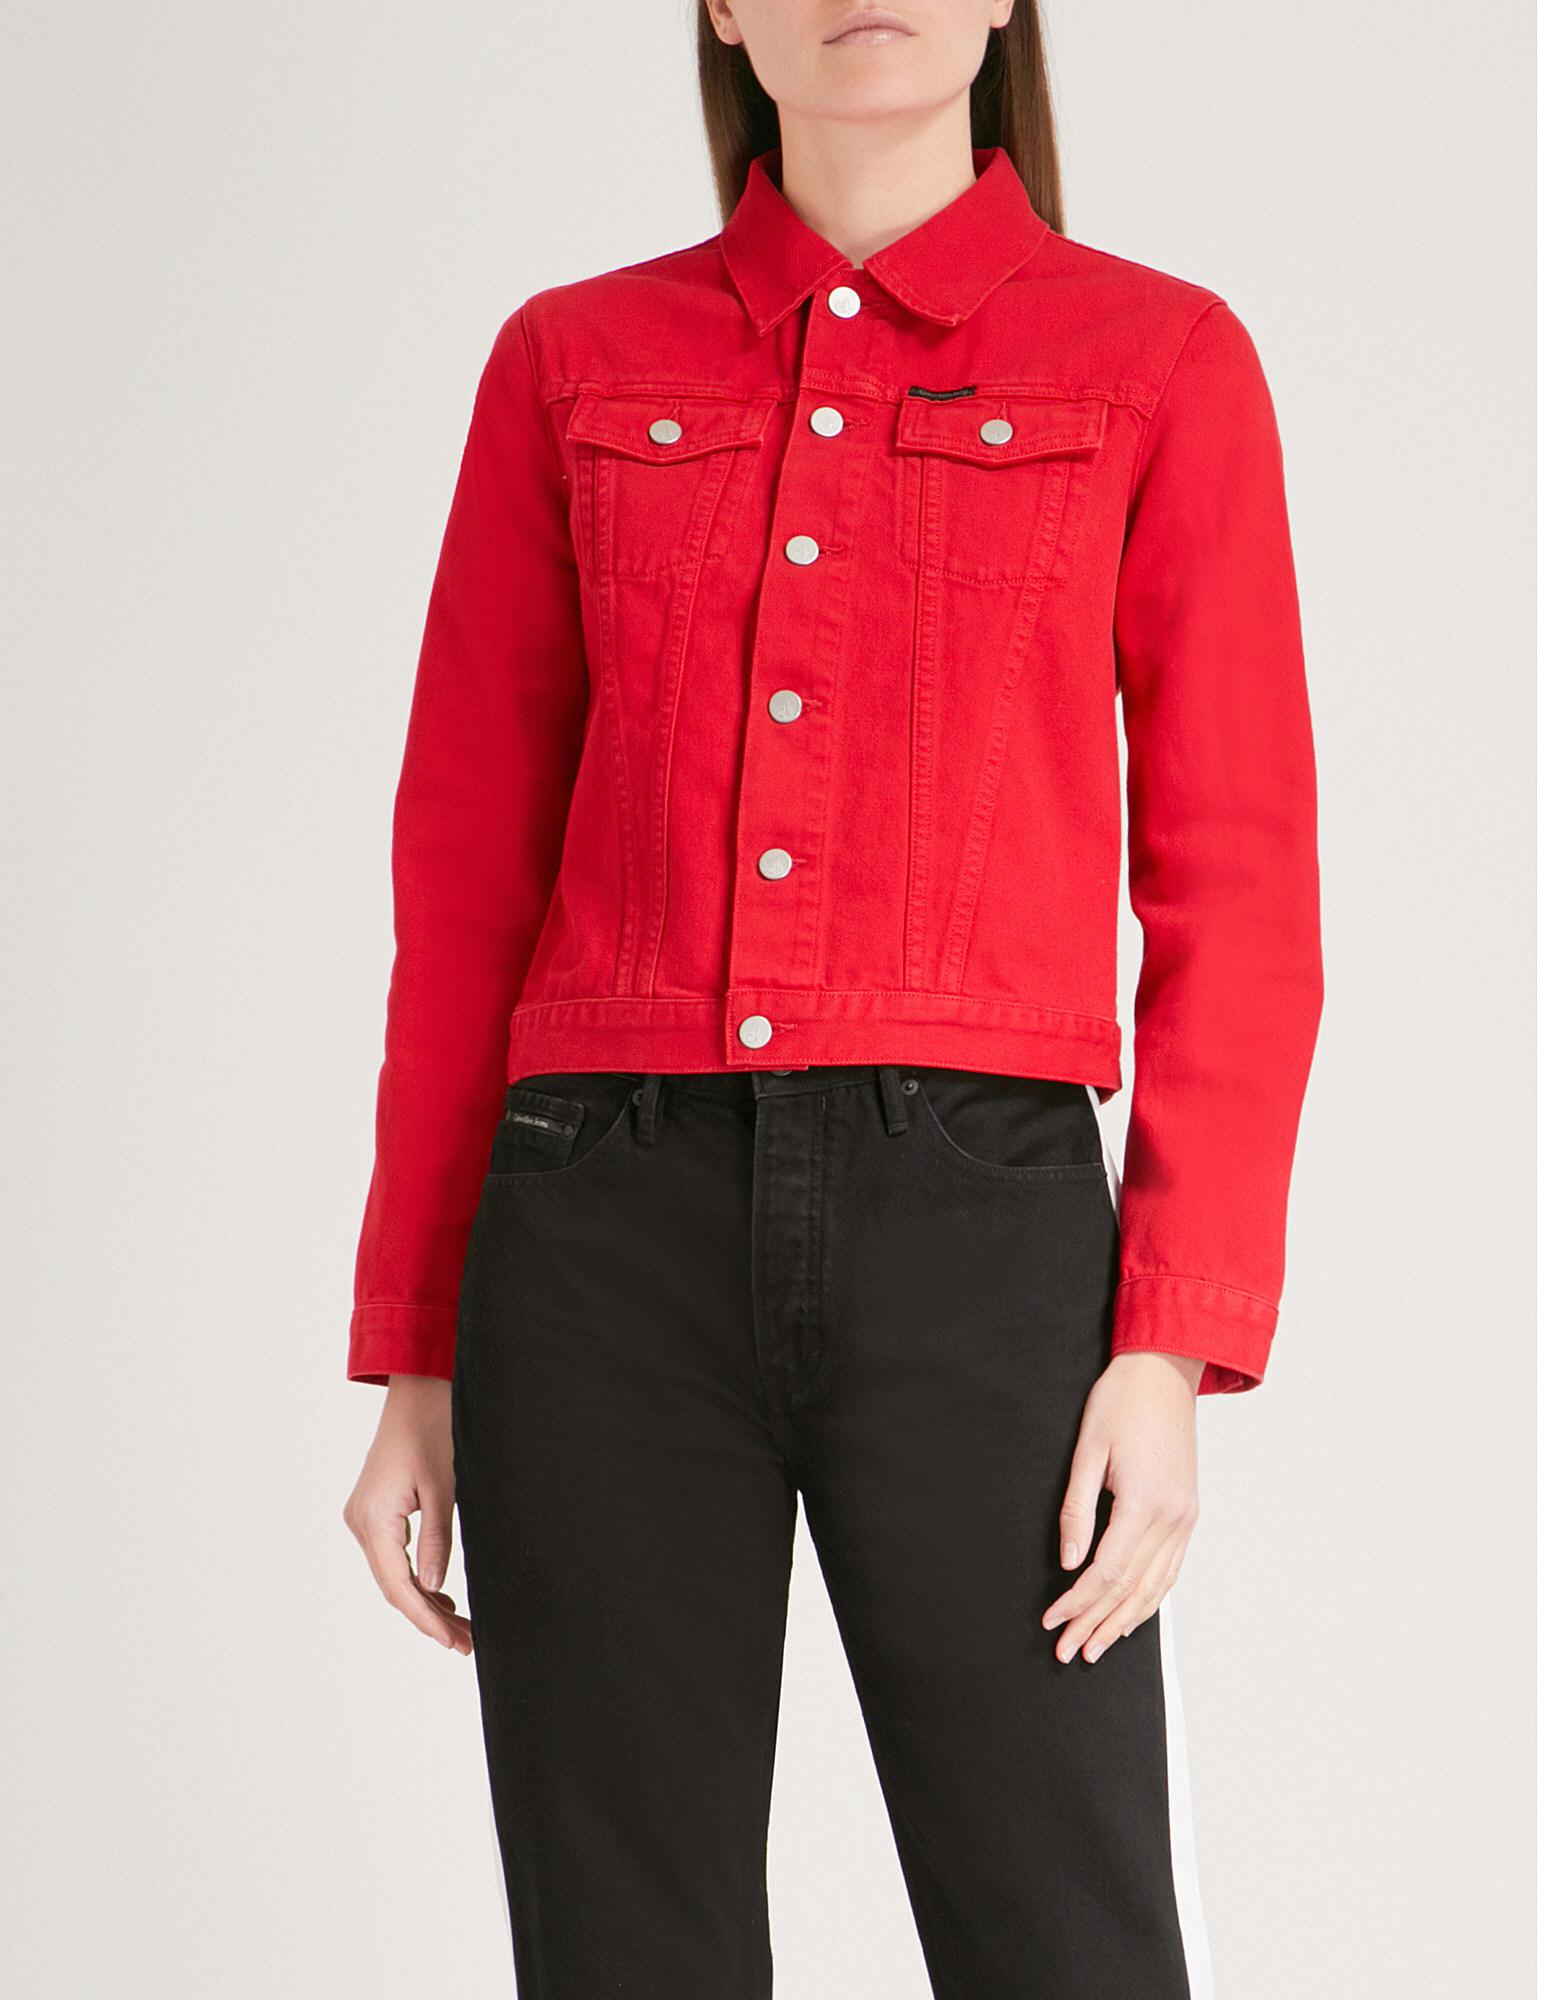 Red Calvin Klein Denim Jacket Flash Sales  dainikhitnewscom 1691333462